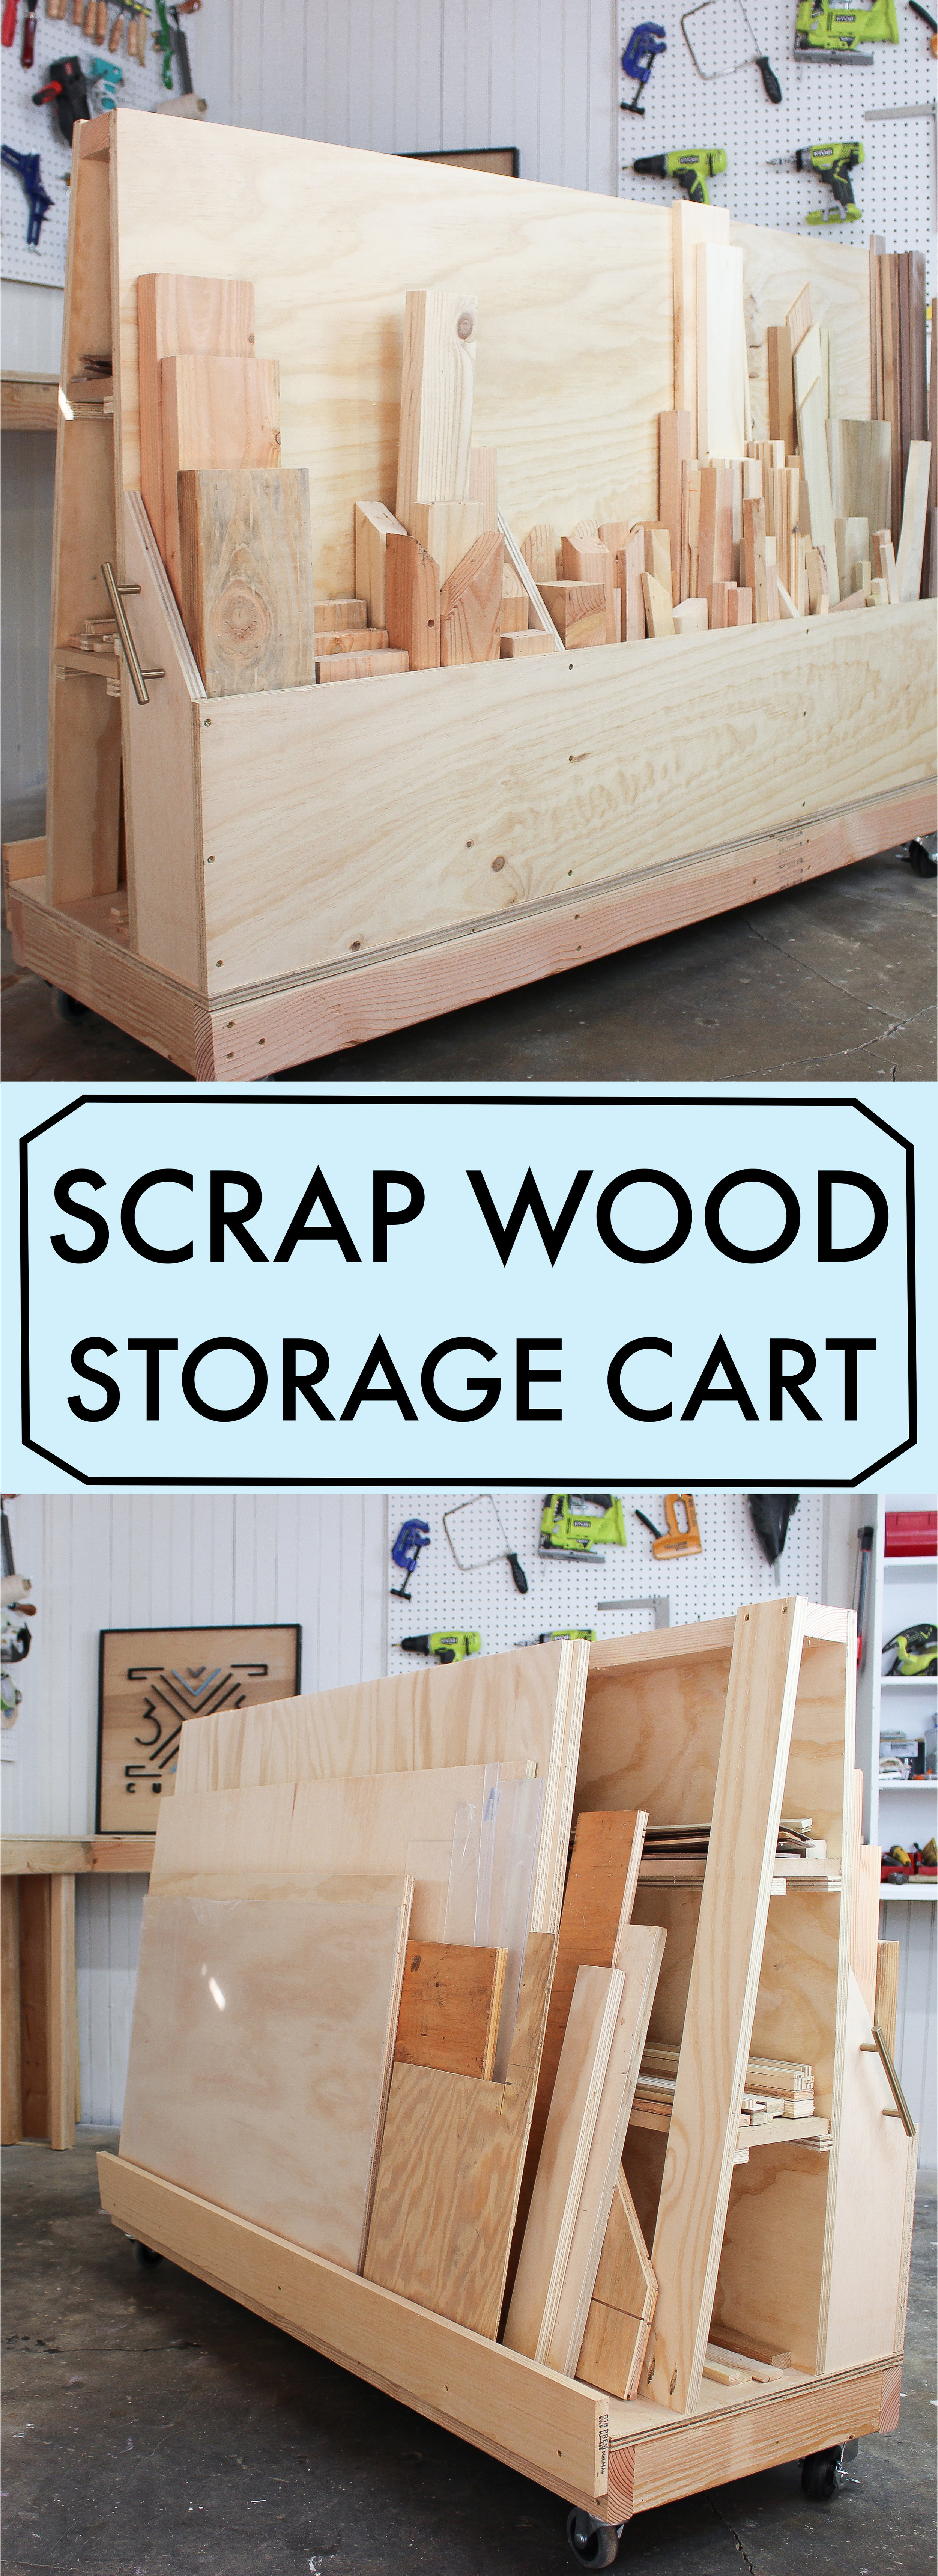 Scrap Wood Storage Bin  Organize Your Garage Wood Scraps